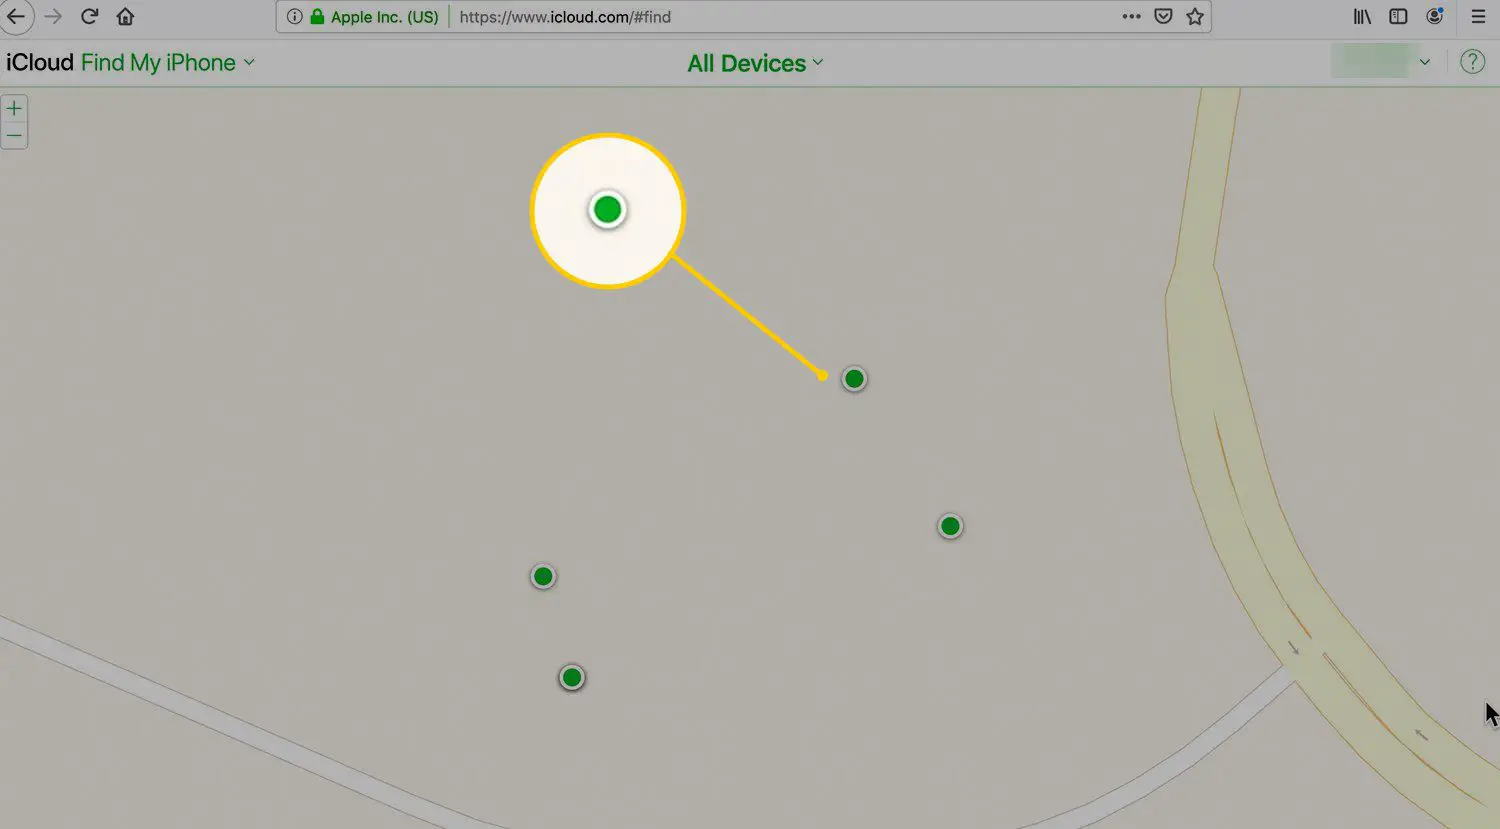 Ponto verde indicando iPhone online no site do iCloud